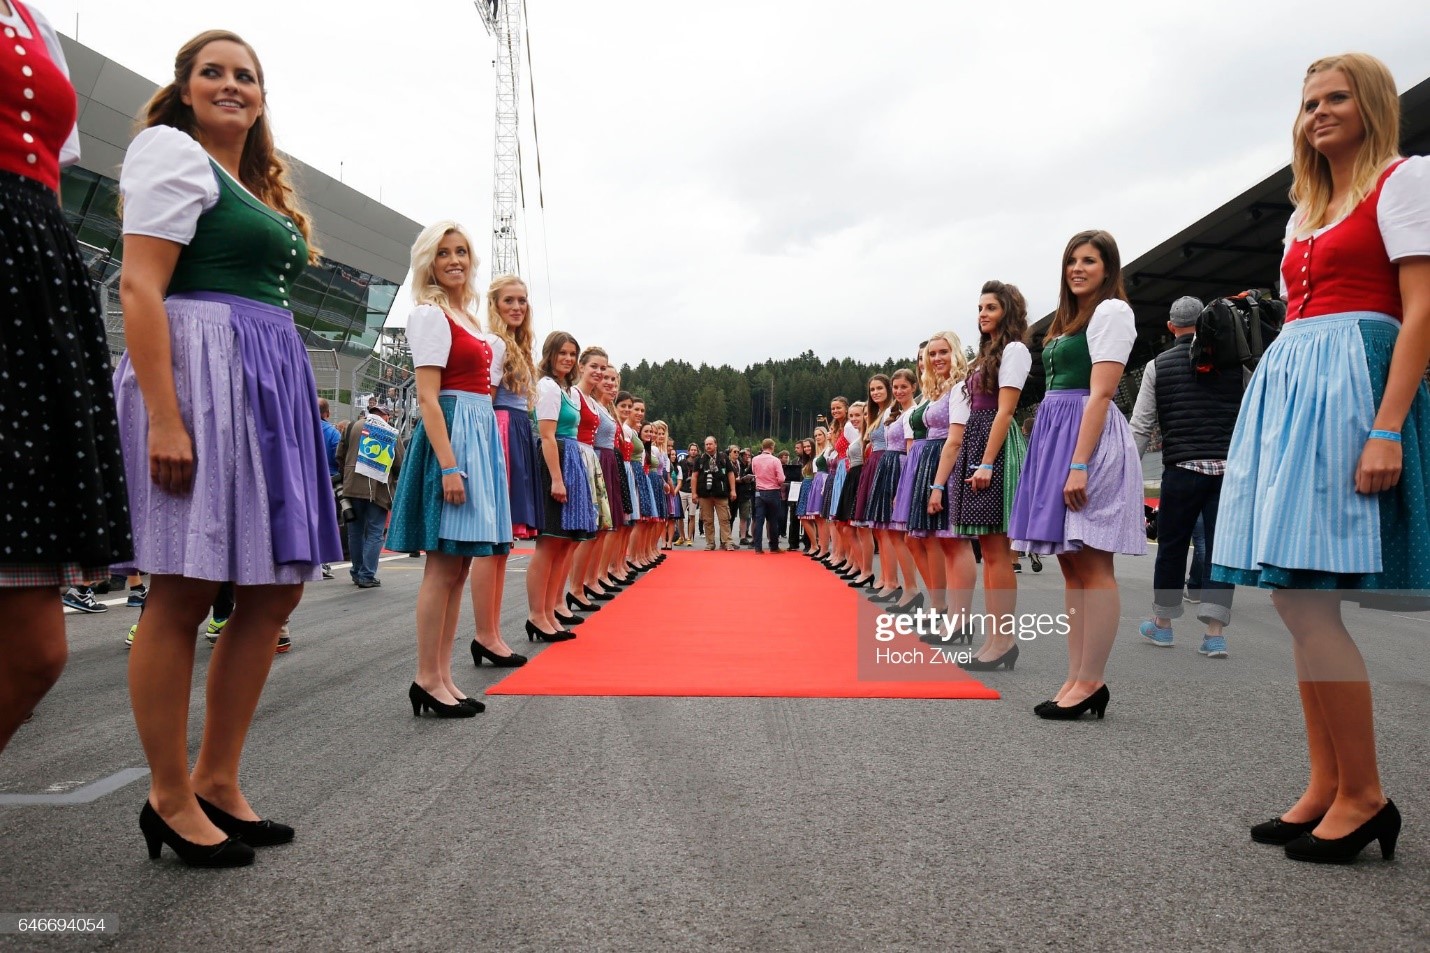 Formula One World Championship, Grand Prix of Austria, June 21, 2015, grid girls. 